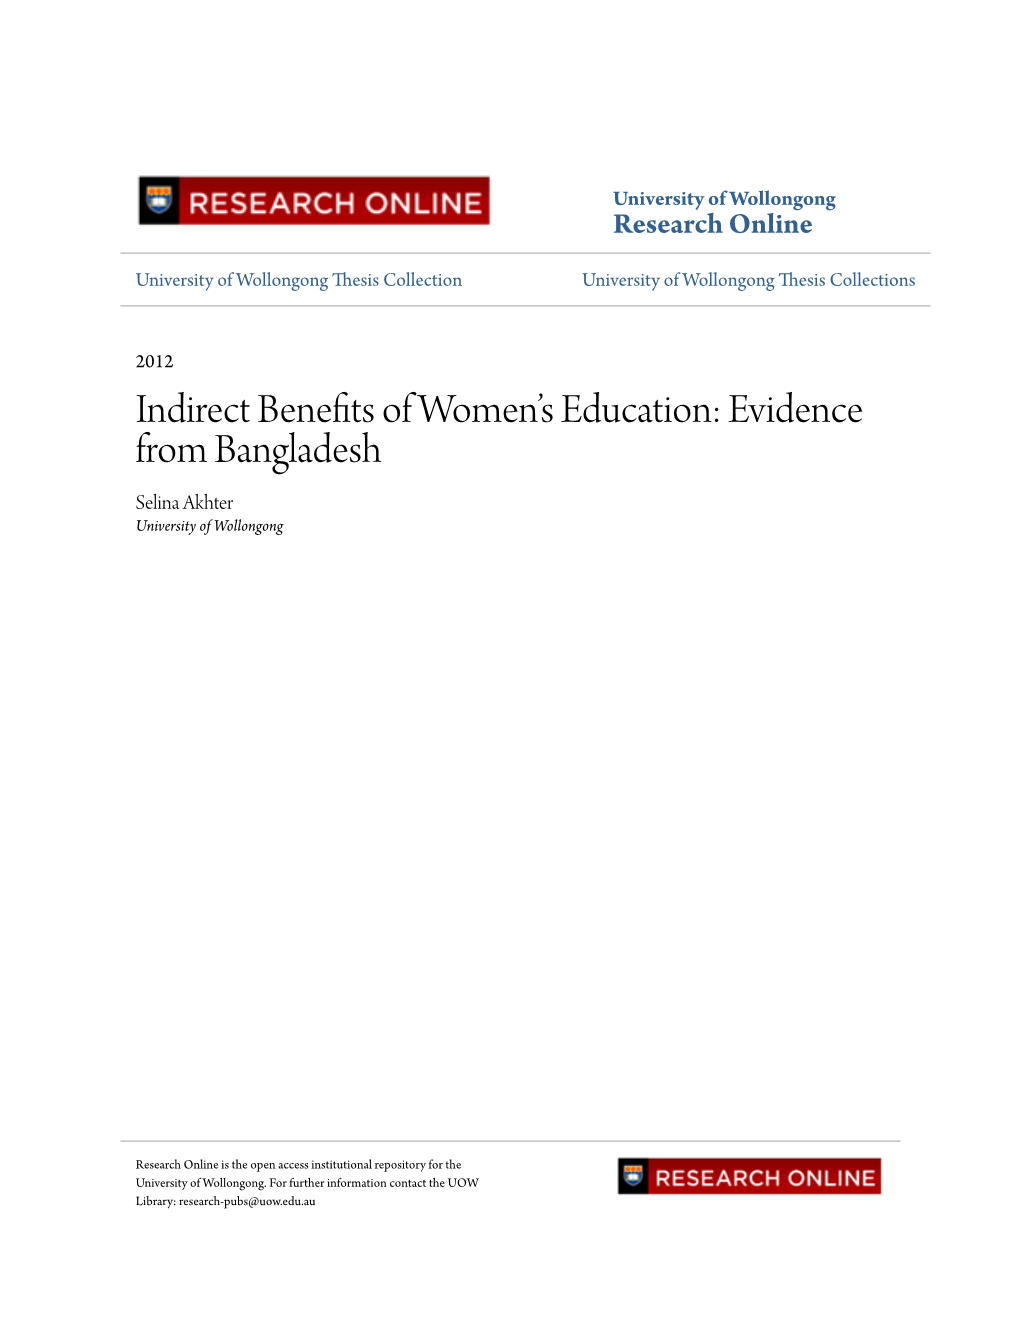 Indirect Benefits of Women's Education